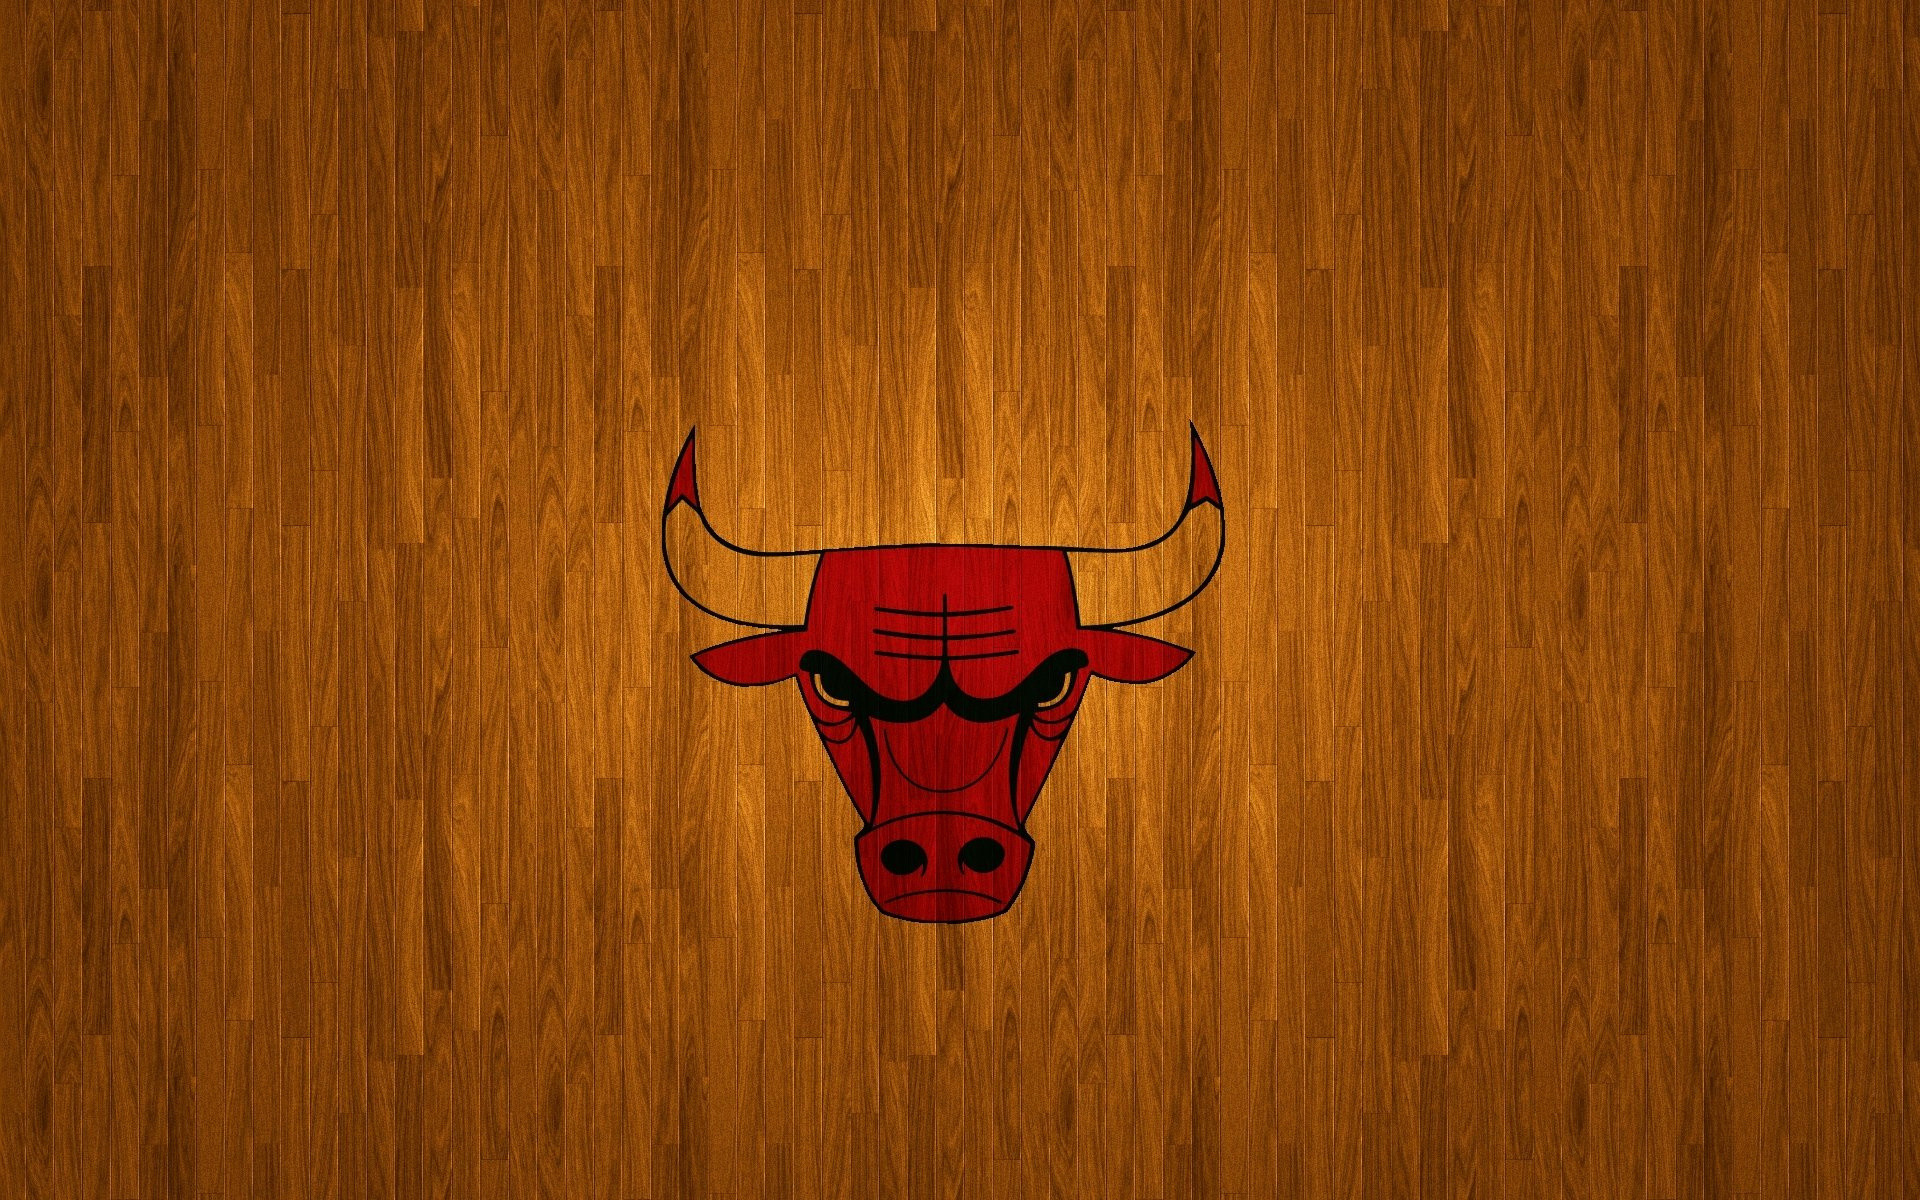 100+] Bulls Logo Wallpapers | Wallpapers.com